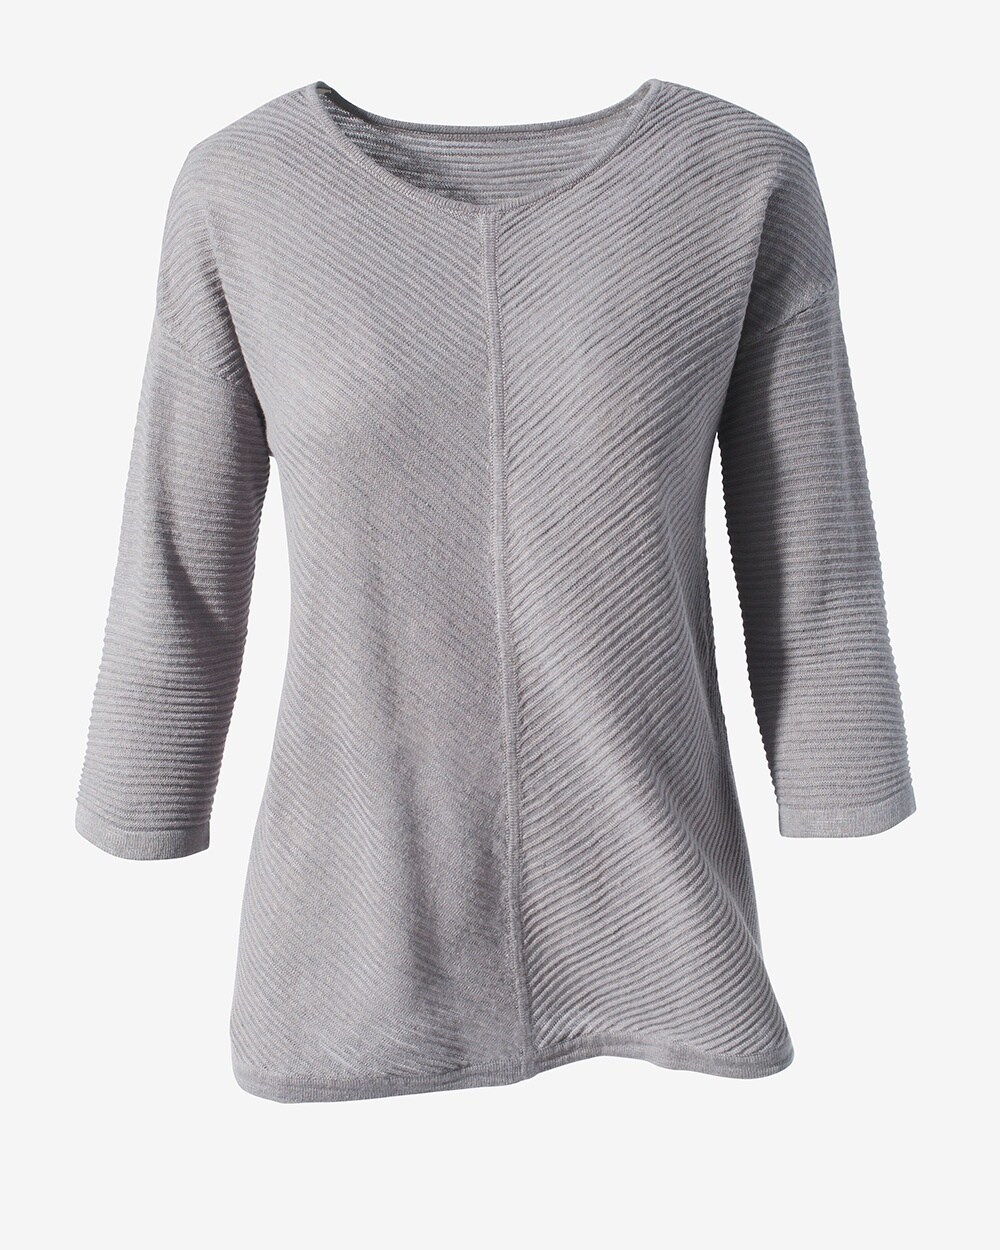 Chevron 3/4-Sleeve Pullover Sweater